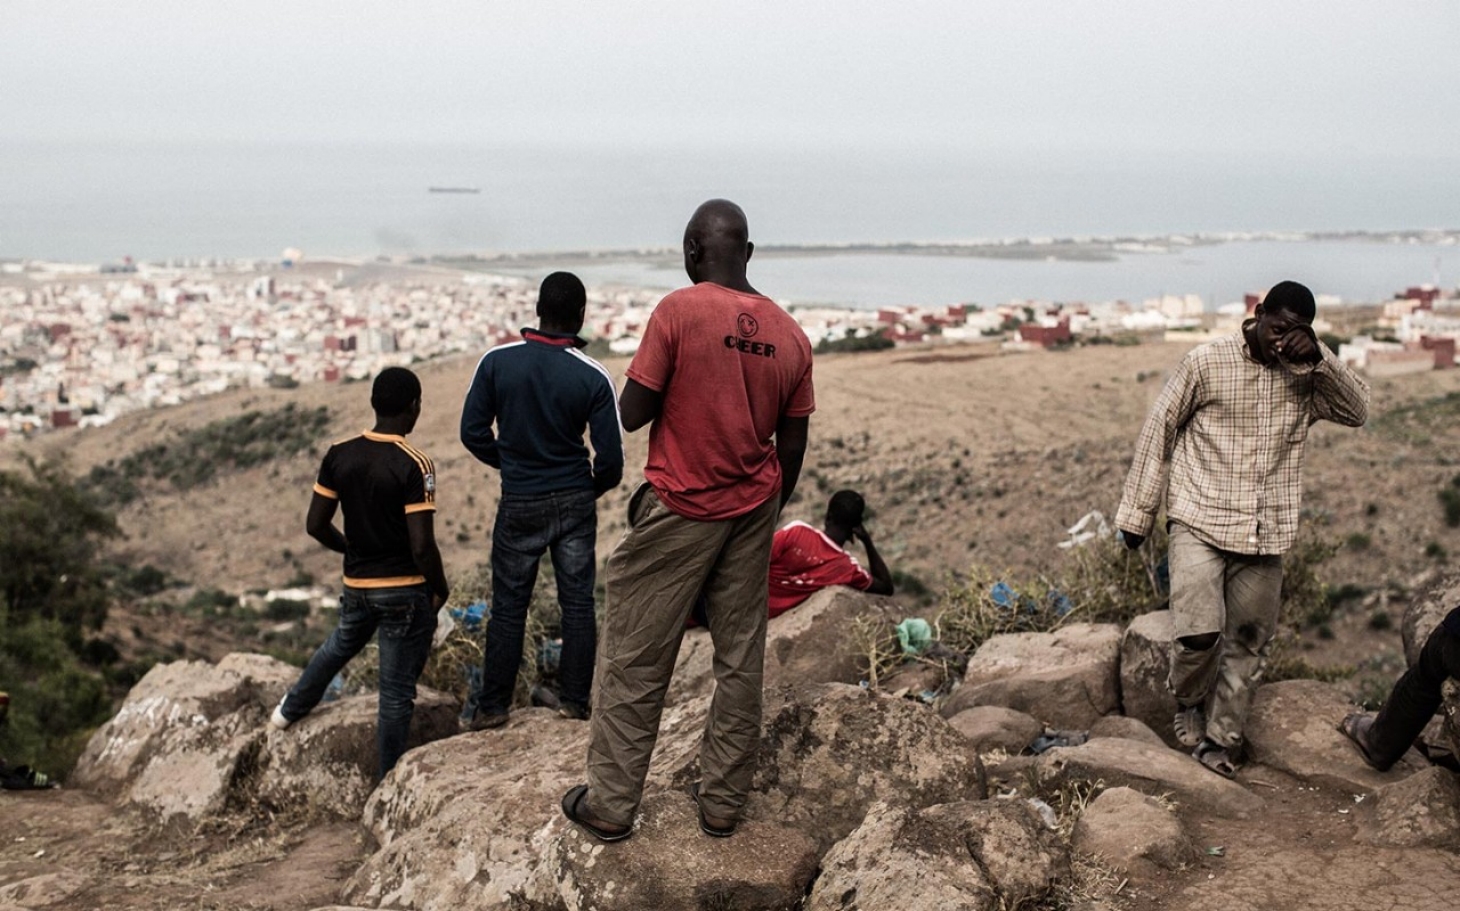 Morocco, ‘Destination of Choice’ for Sub-Saharan Migrants, Irish Times